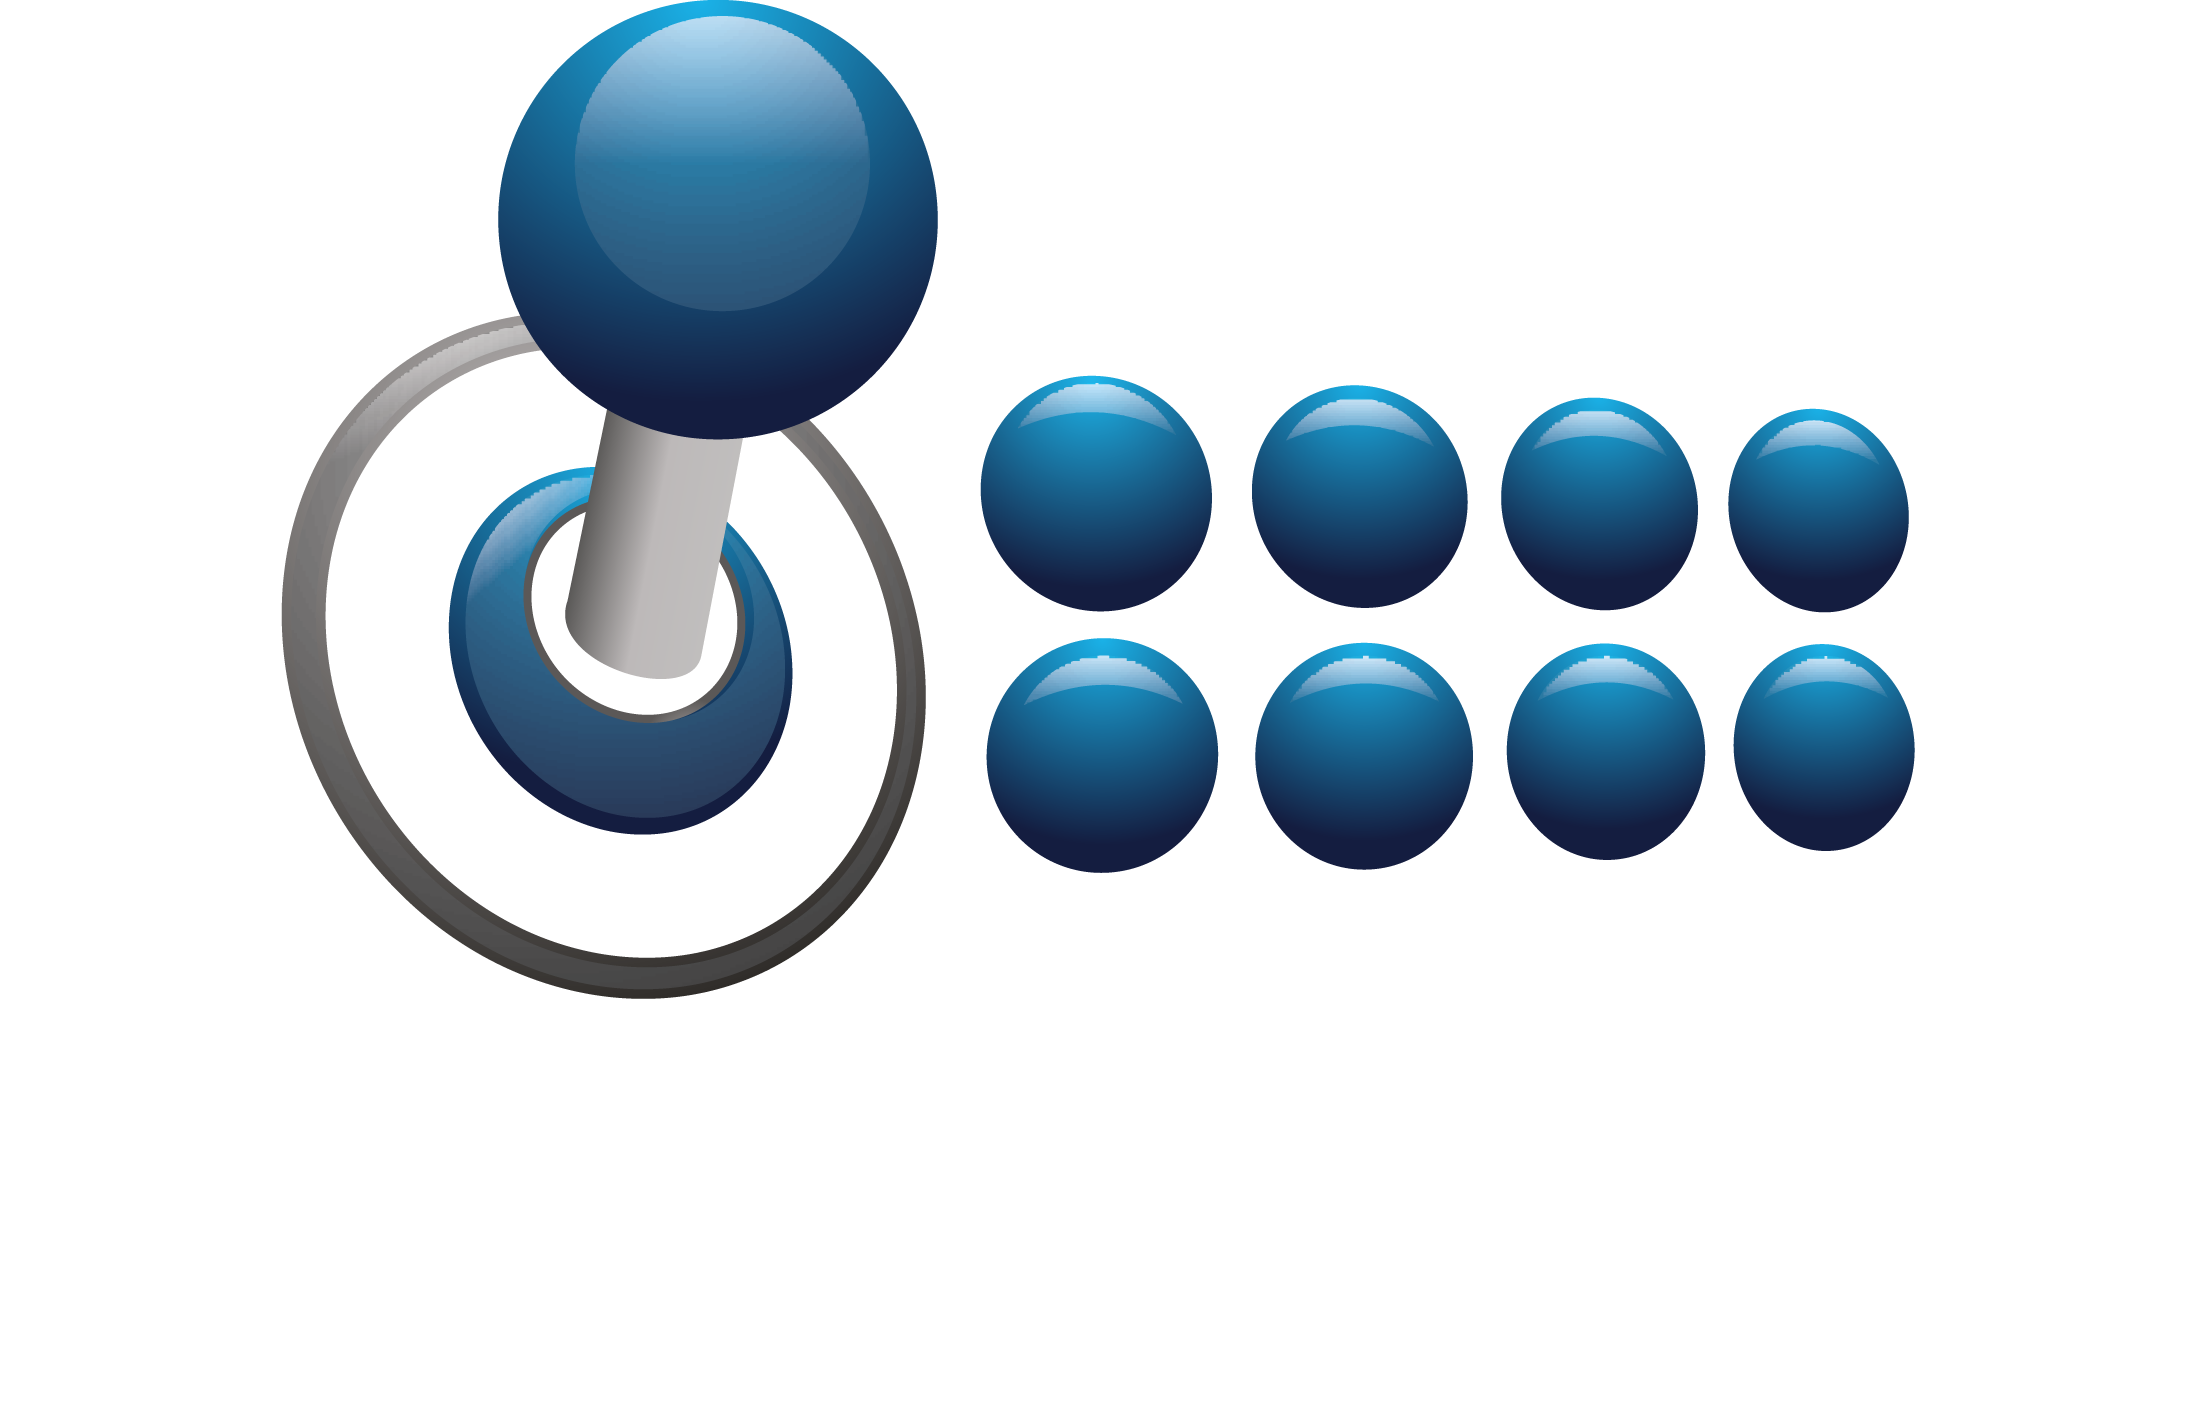 Qanba